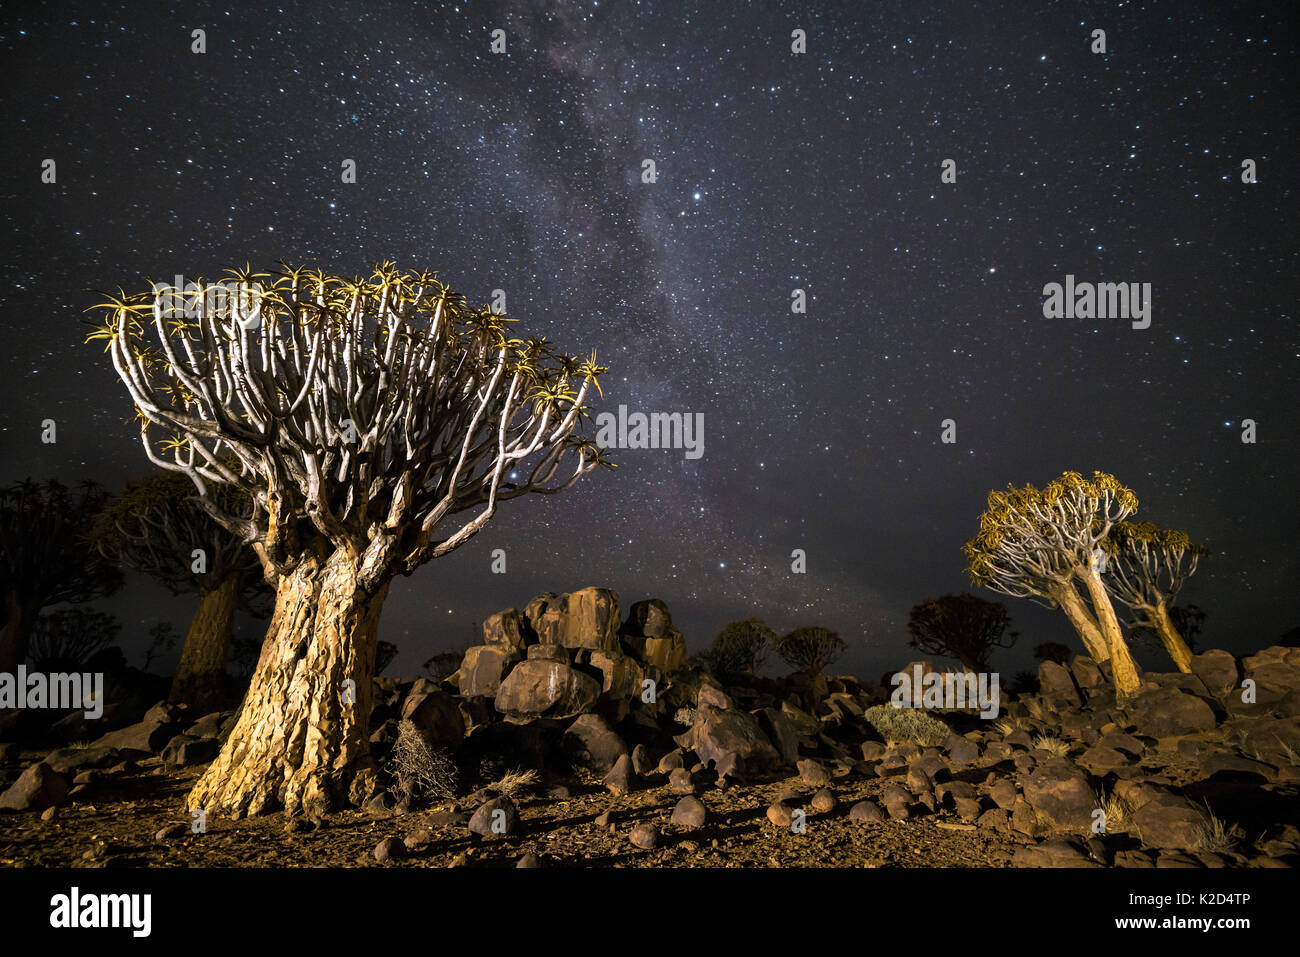 Faretra alberi (Aloe dichotoma) con la Via Lattea di notte, Keetmanshoop, Namibia. Foto Stock